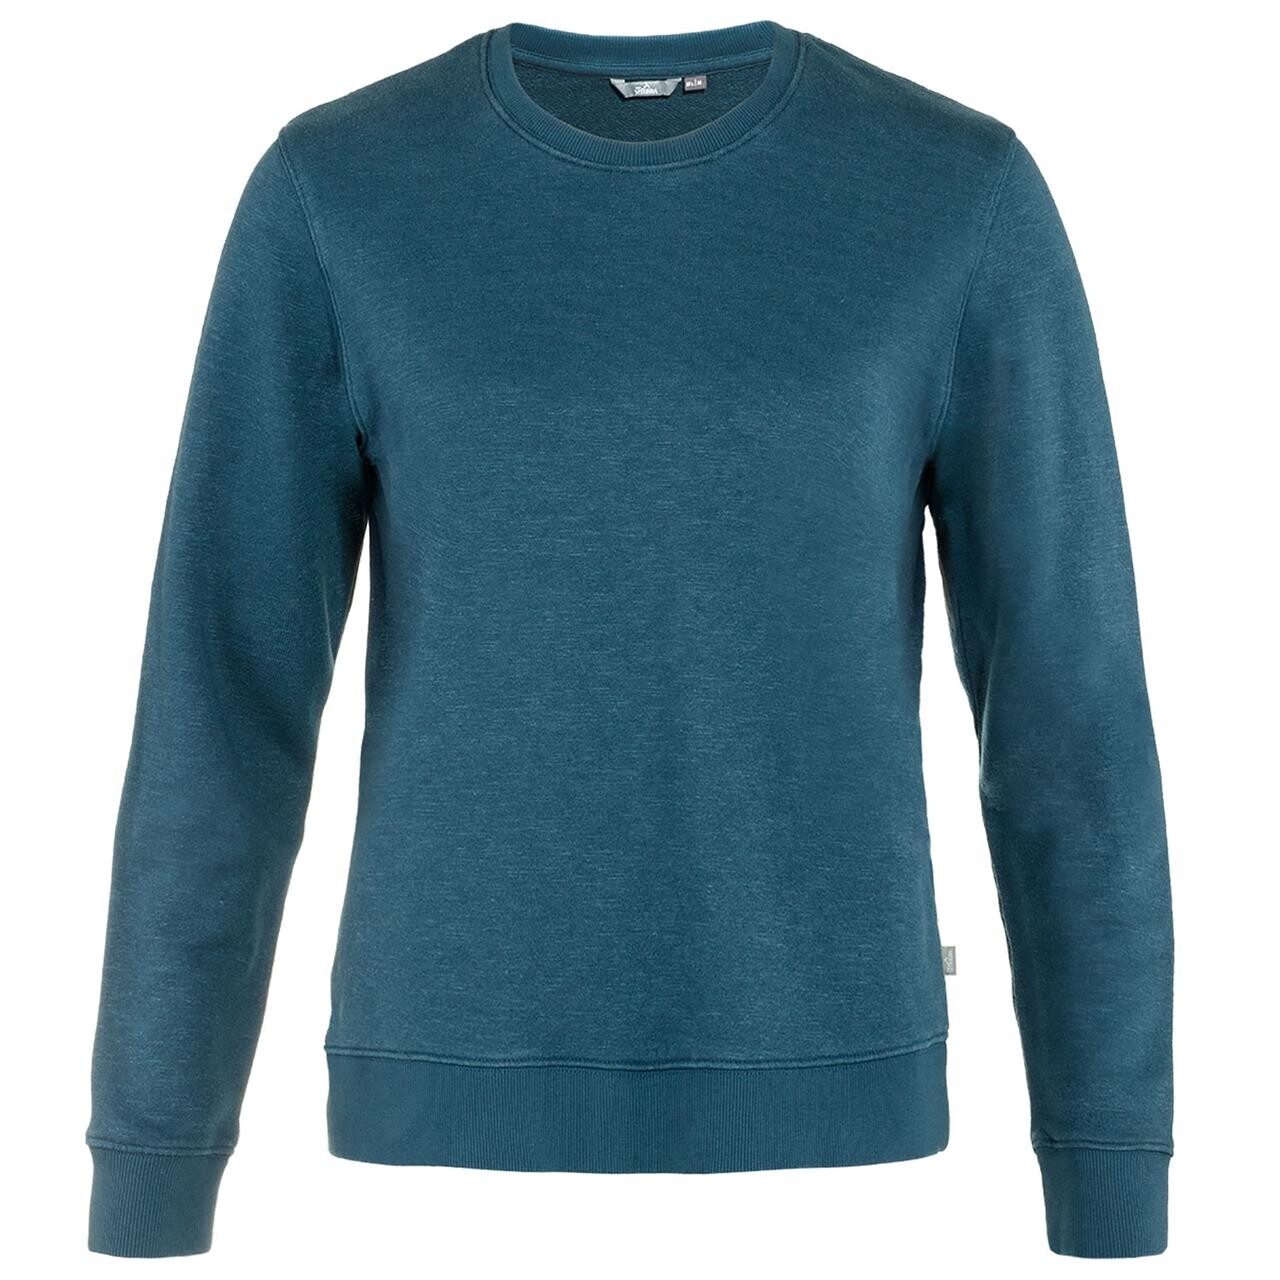 Se Tierra Womens Hempy Sweater (Blå (MAJOLICA BLUE) Small) hos Friluftsland.dk